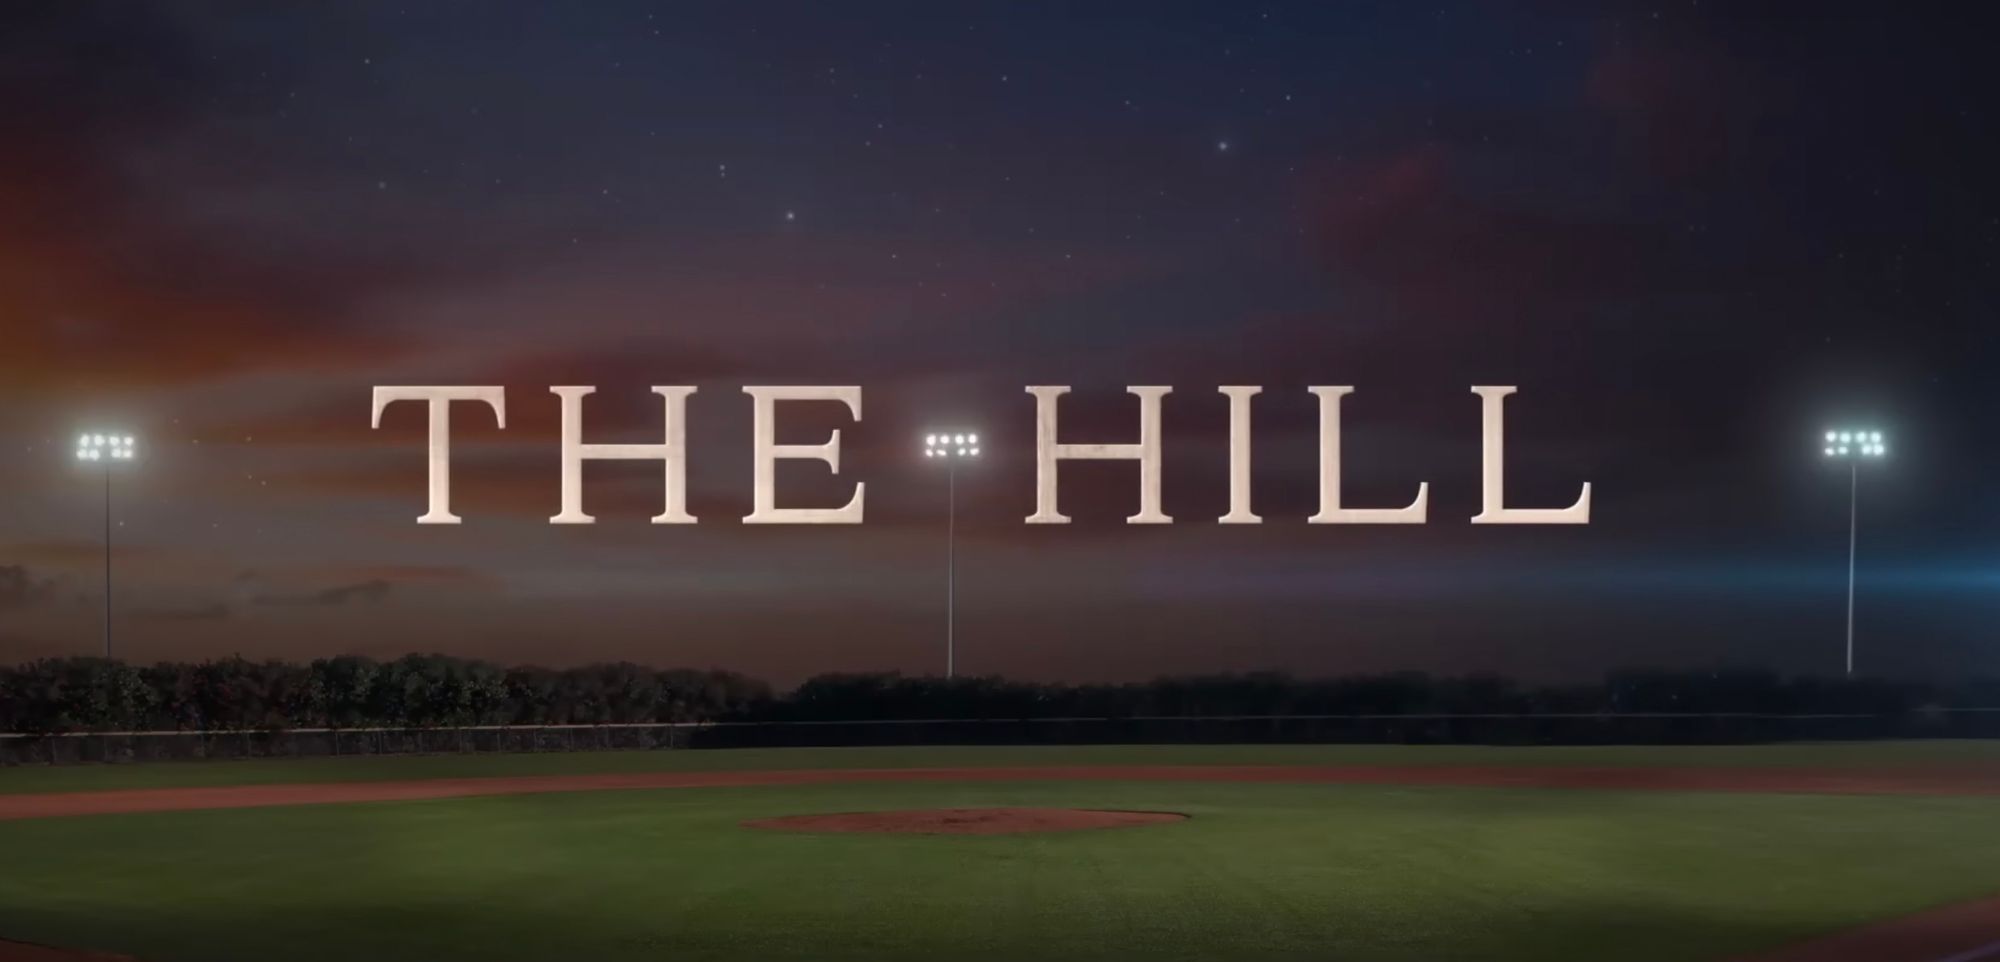 Weekend Box Office: Dennis Quaid Helps Push a Faith-Based Film Over "The Hill"